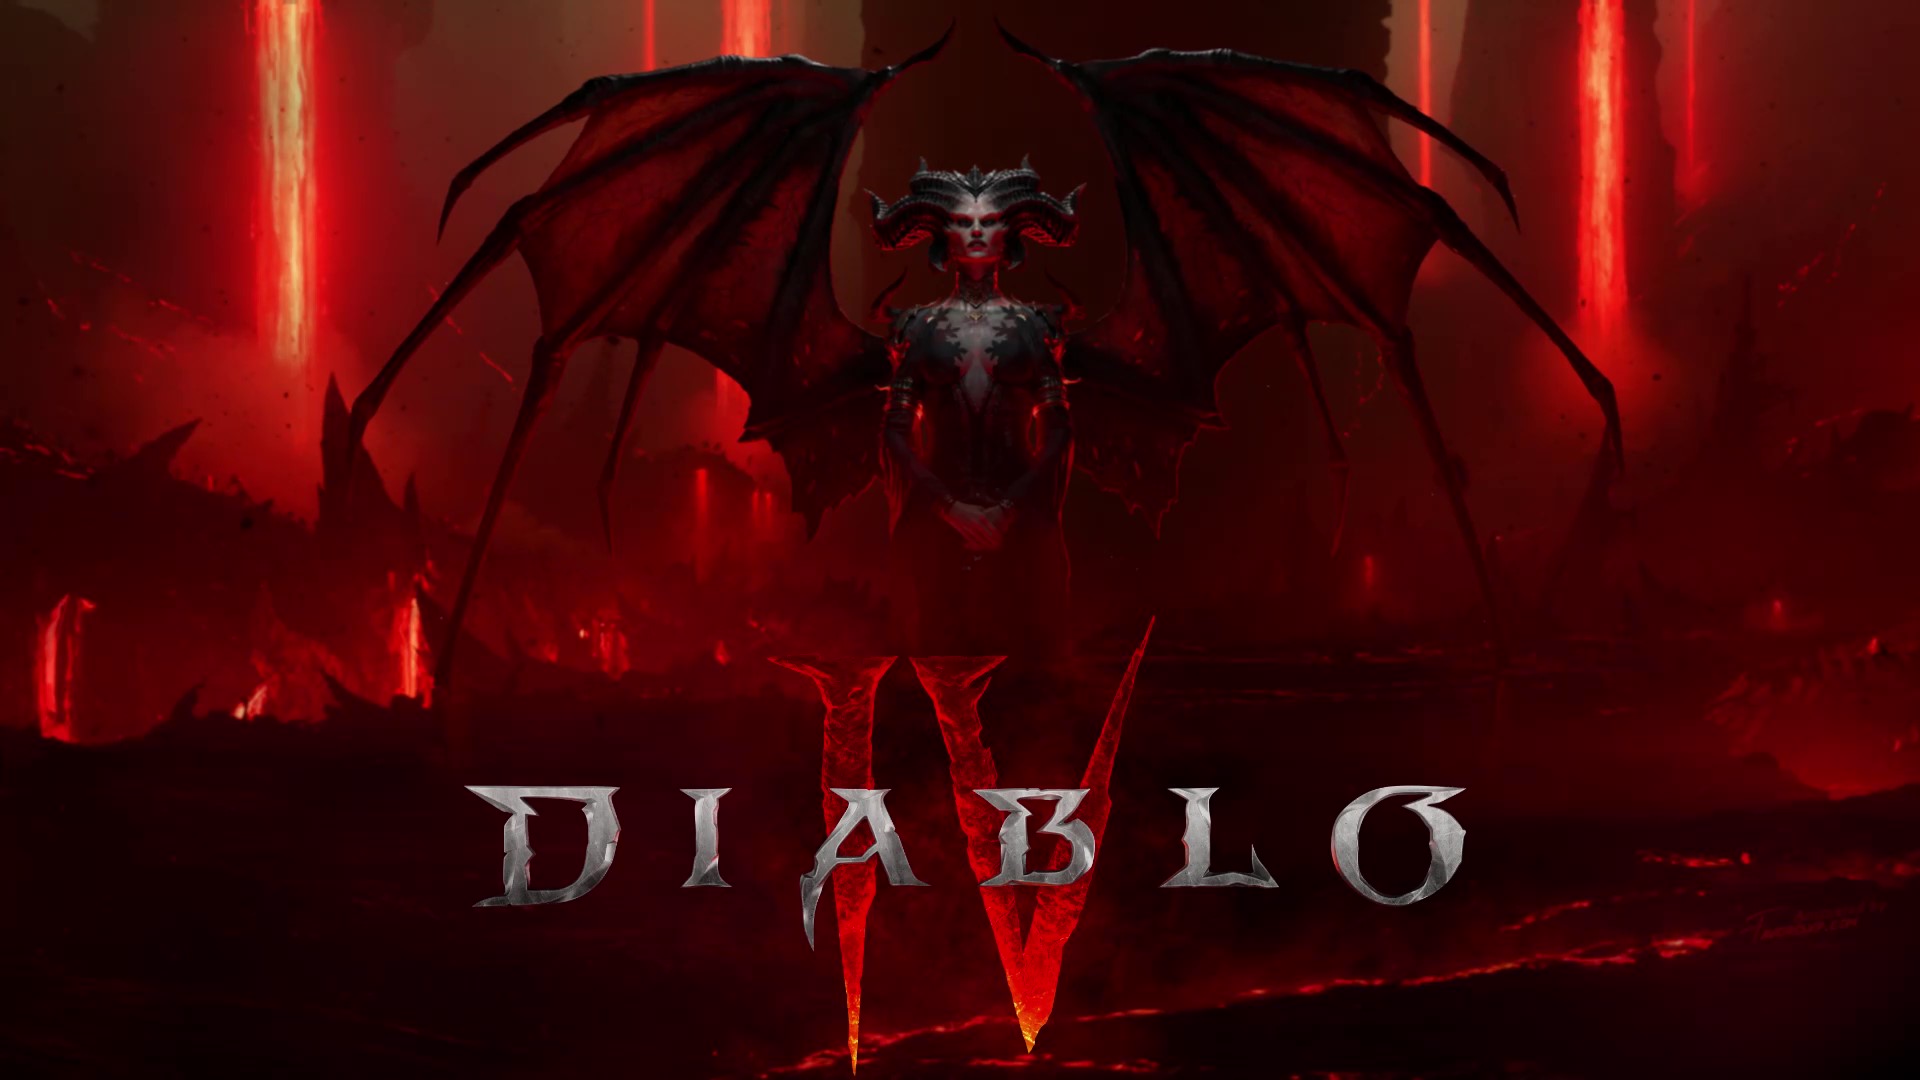 Lilith - Logo Diablo IV Animated Wallpaper by Favorisxp on DeviantArt